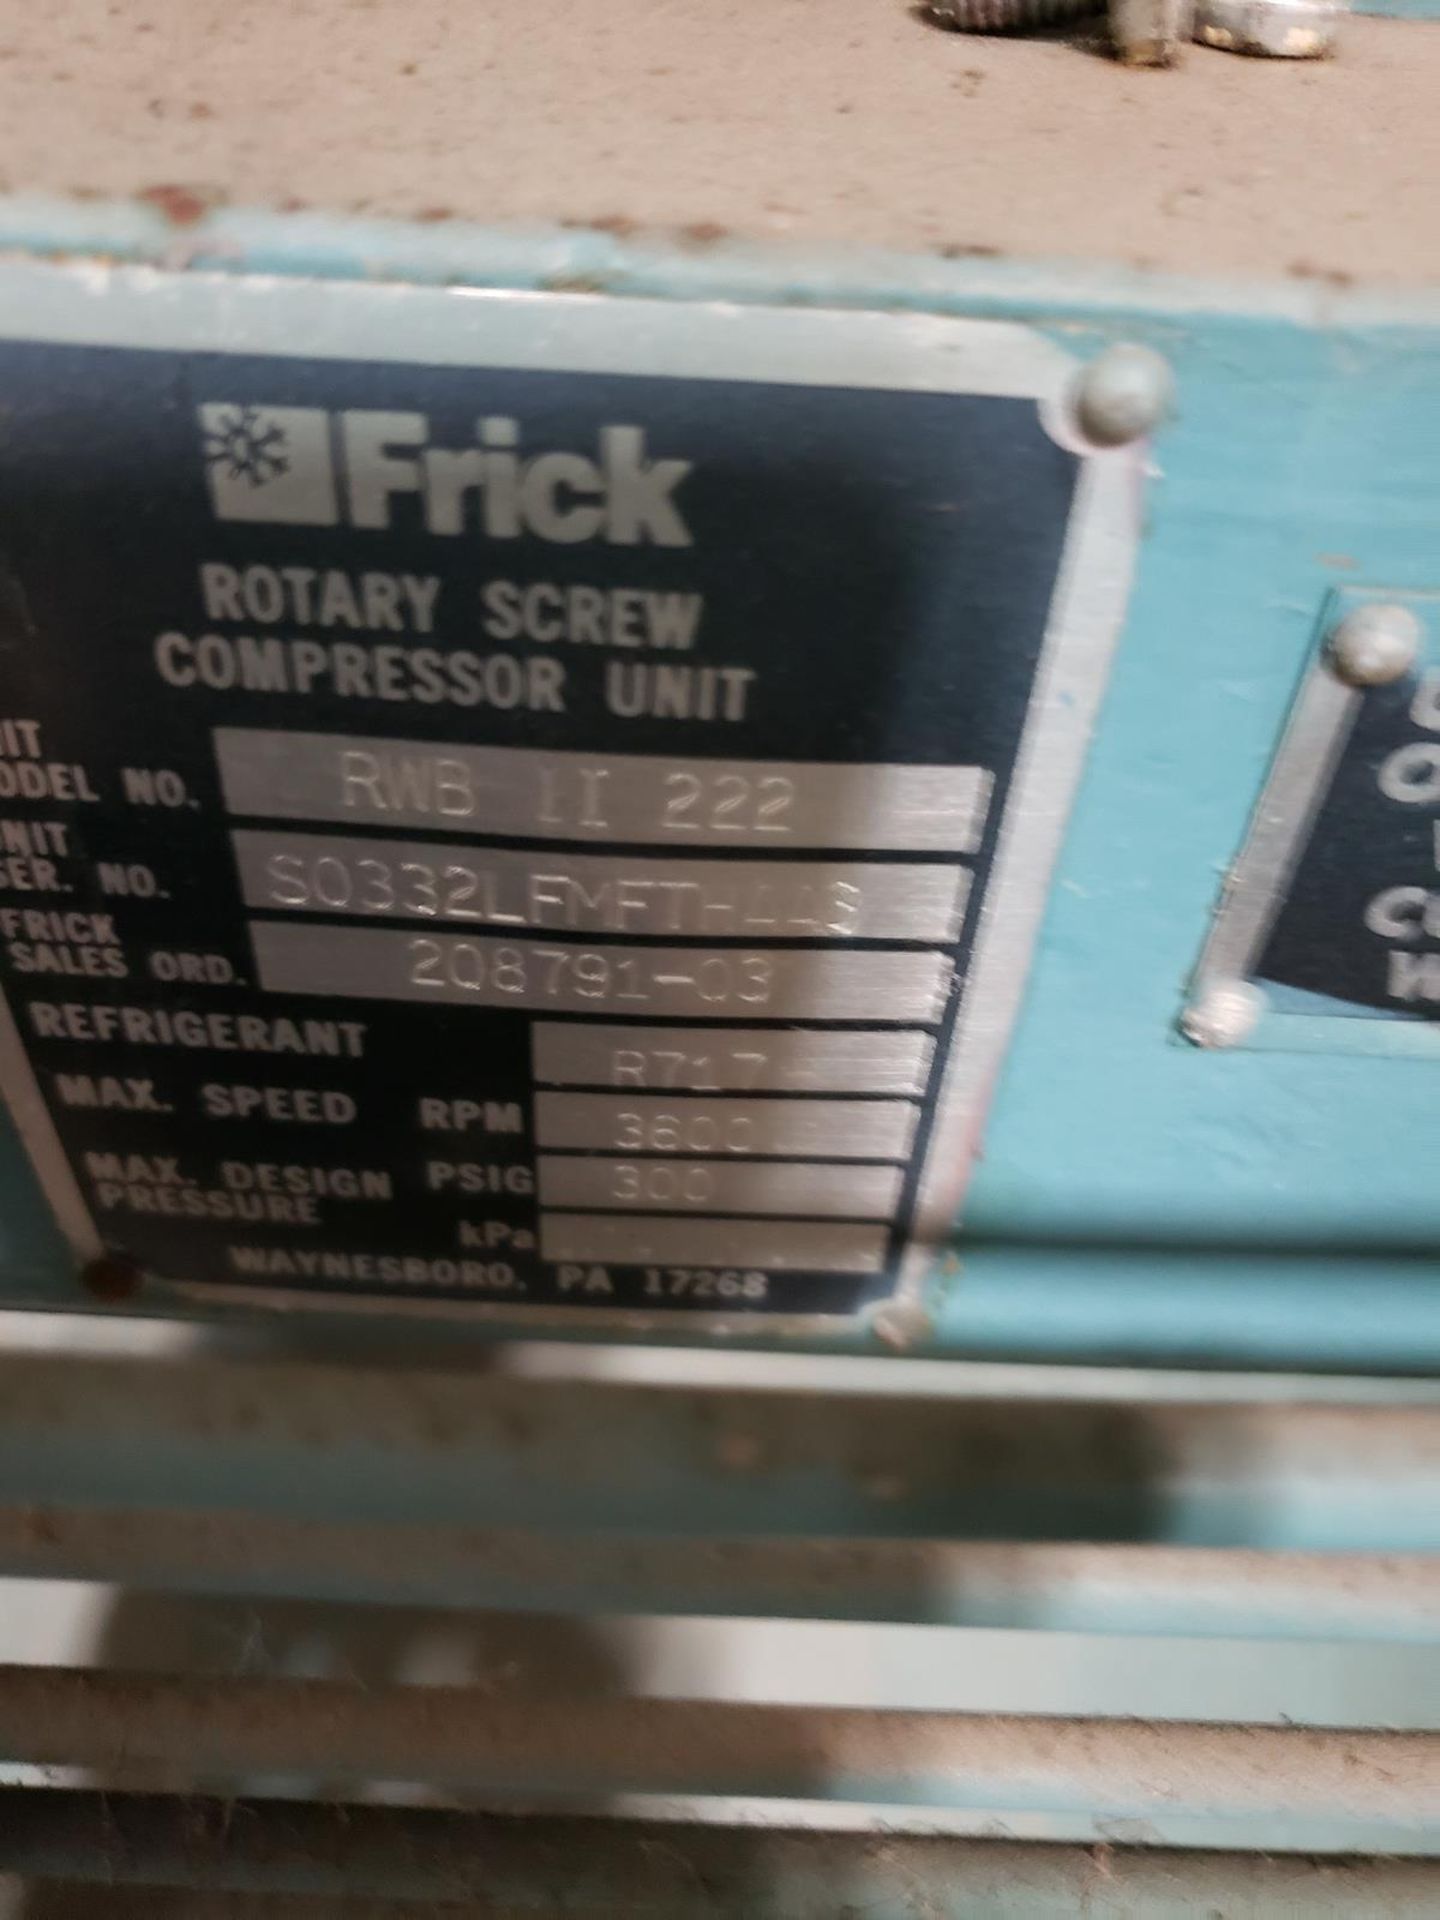 Frick Ammonia Rotary Screw Refrigeration Compressor, M# RWB II 222 - Image 2 of 2